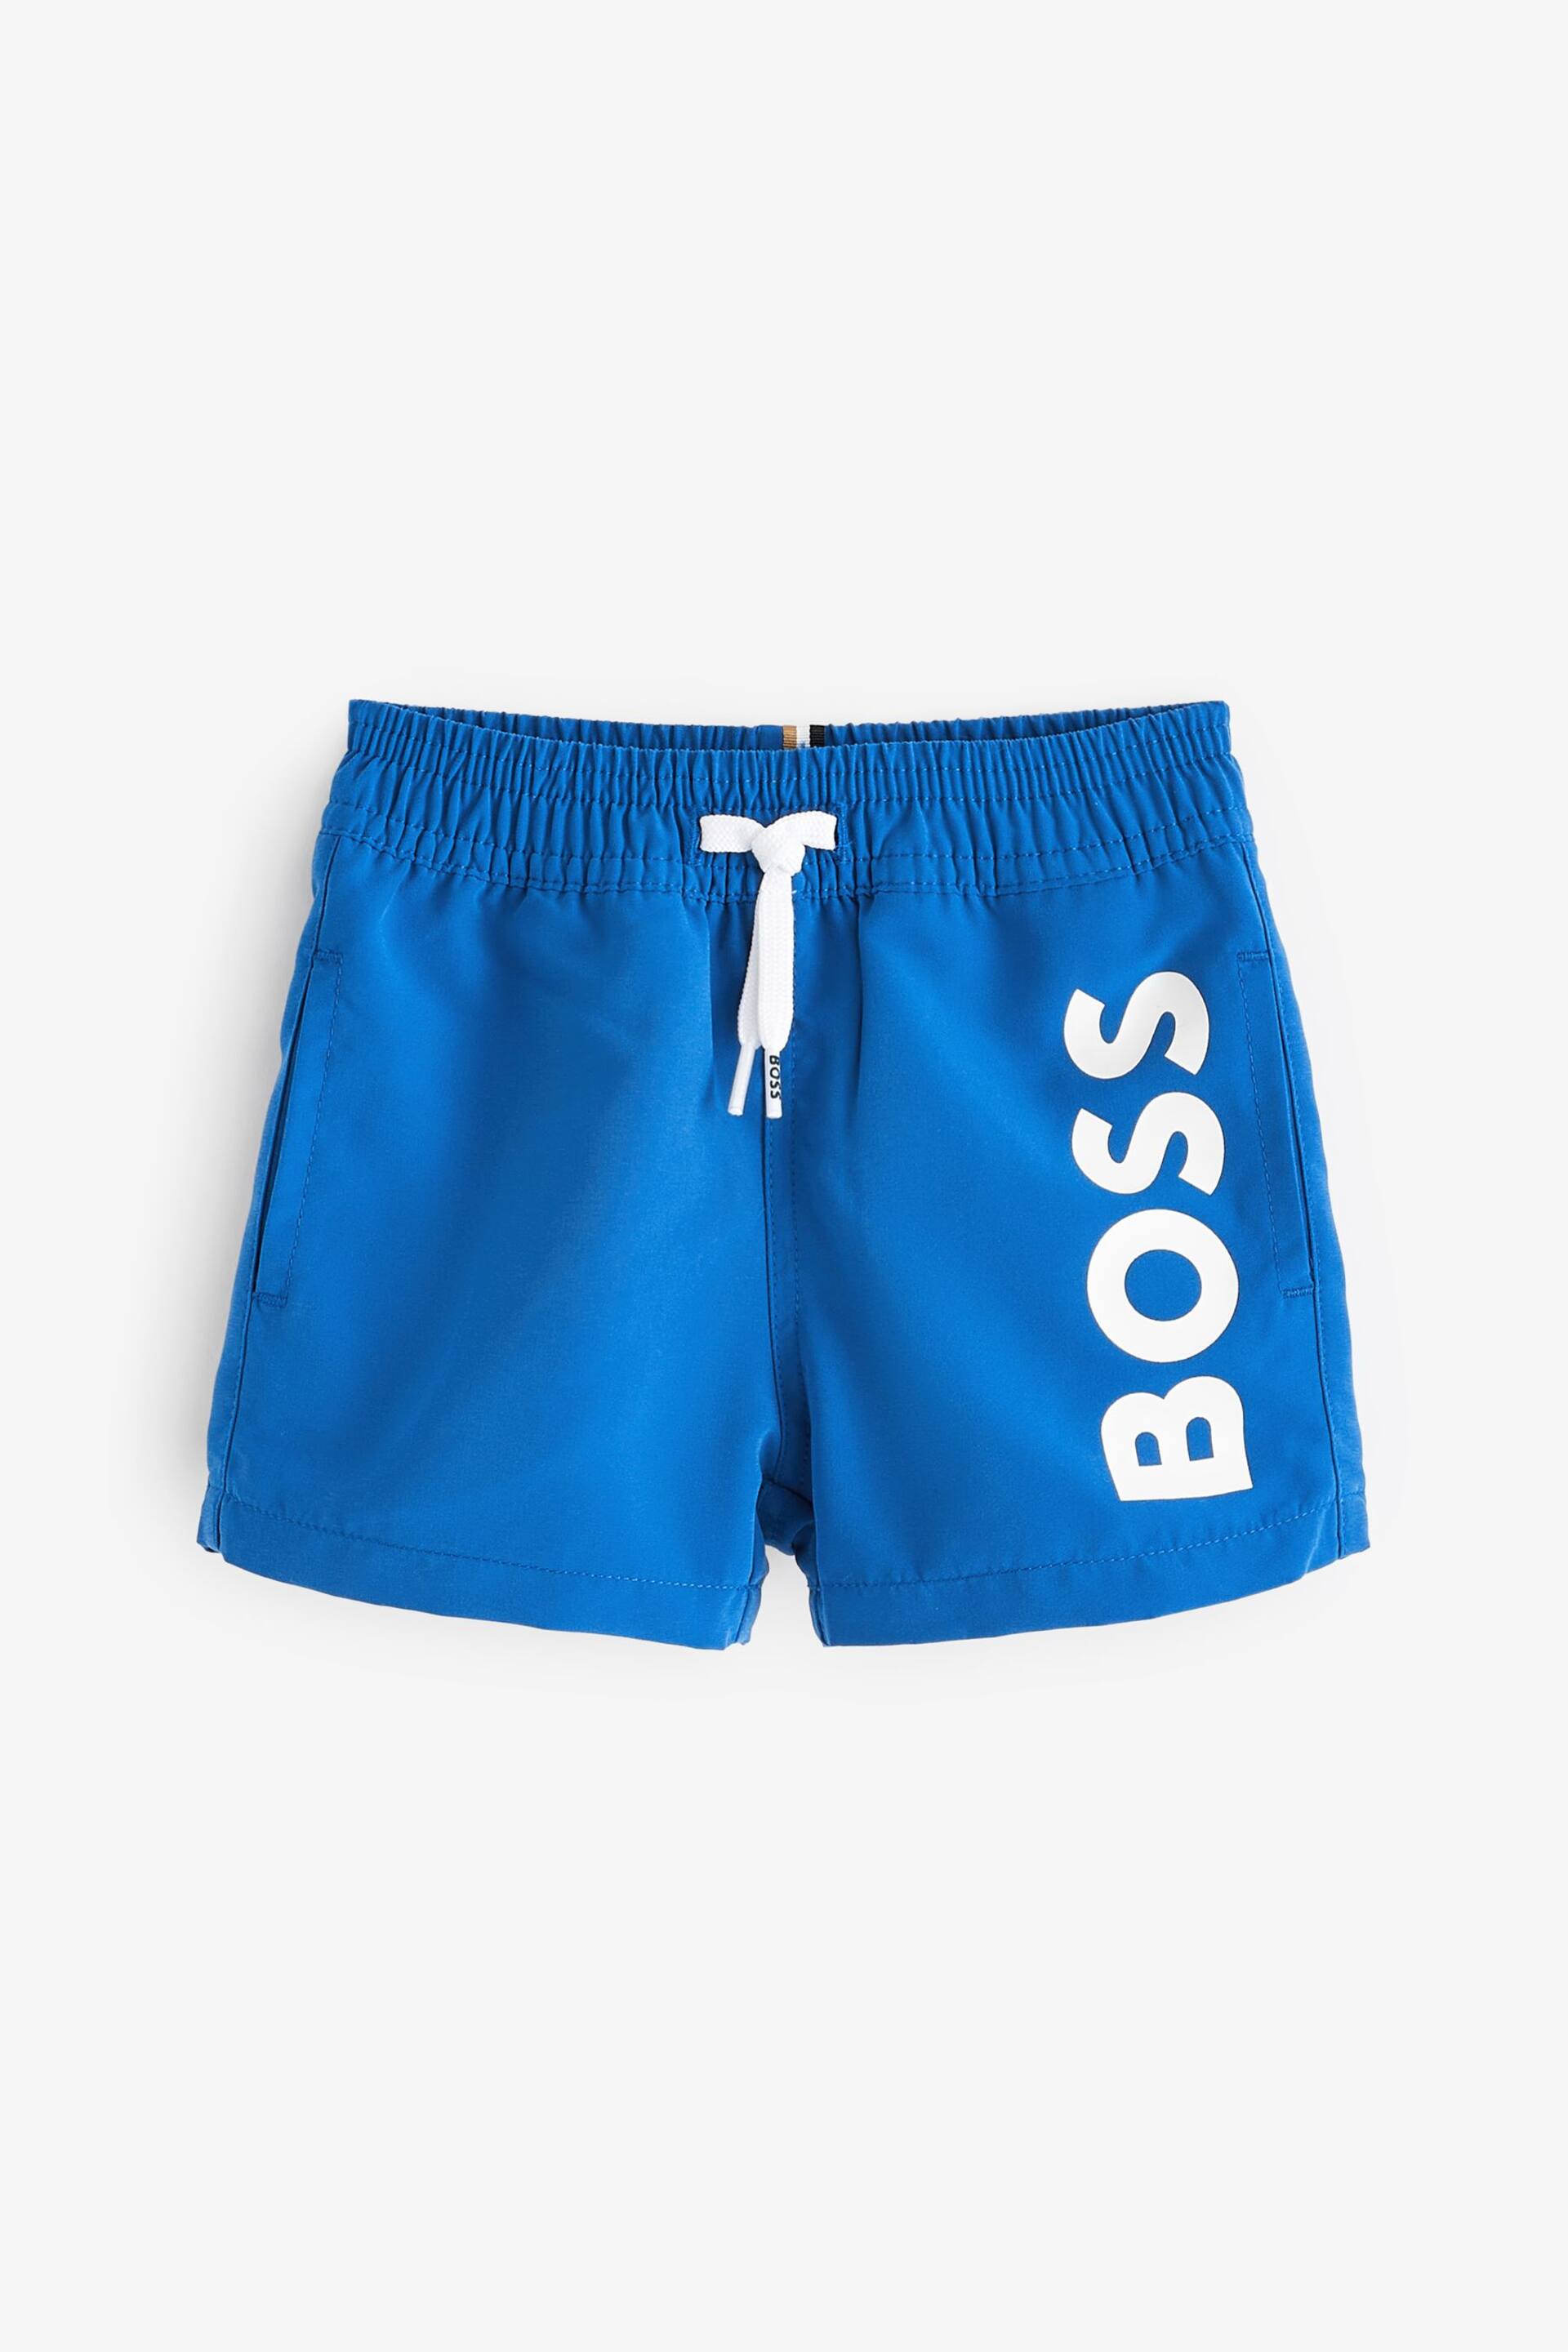 BOSS Sky Blue Logo Swim Shorts - Image 1 of 3